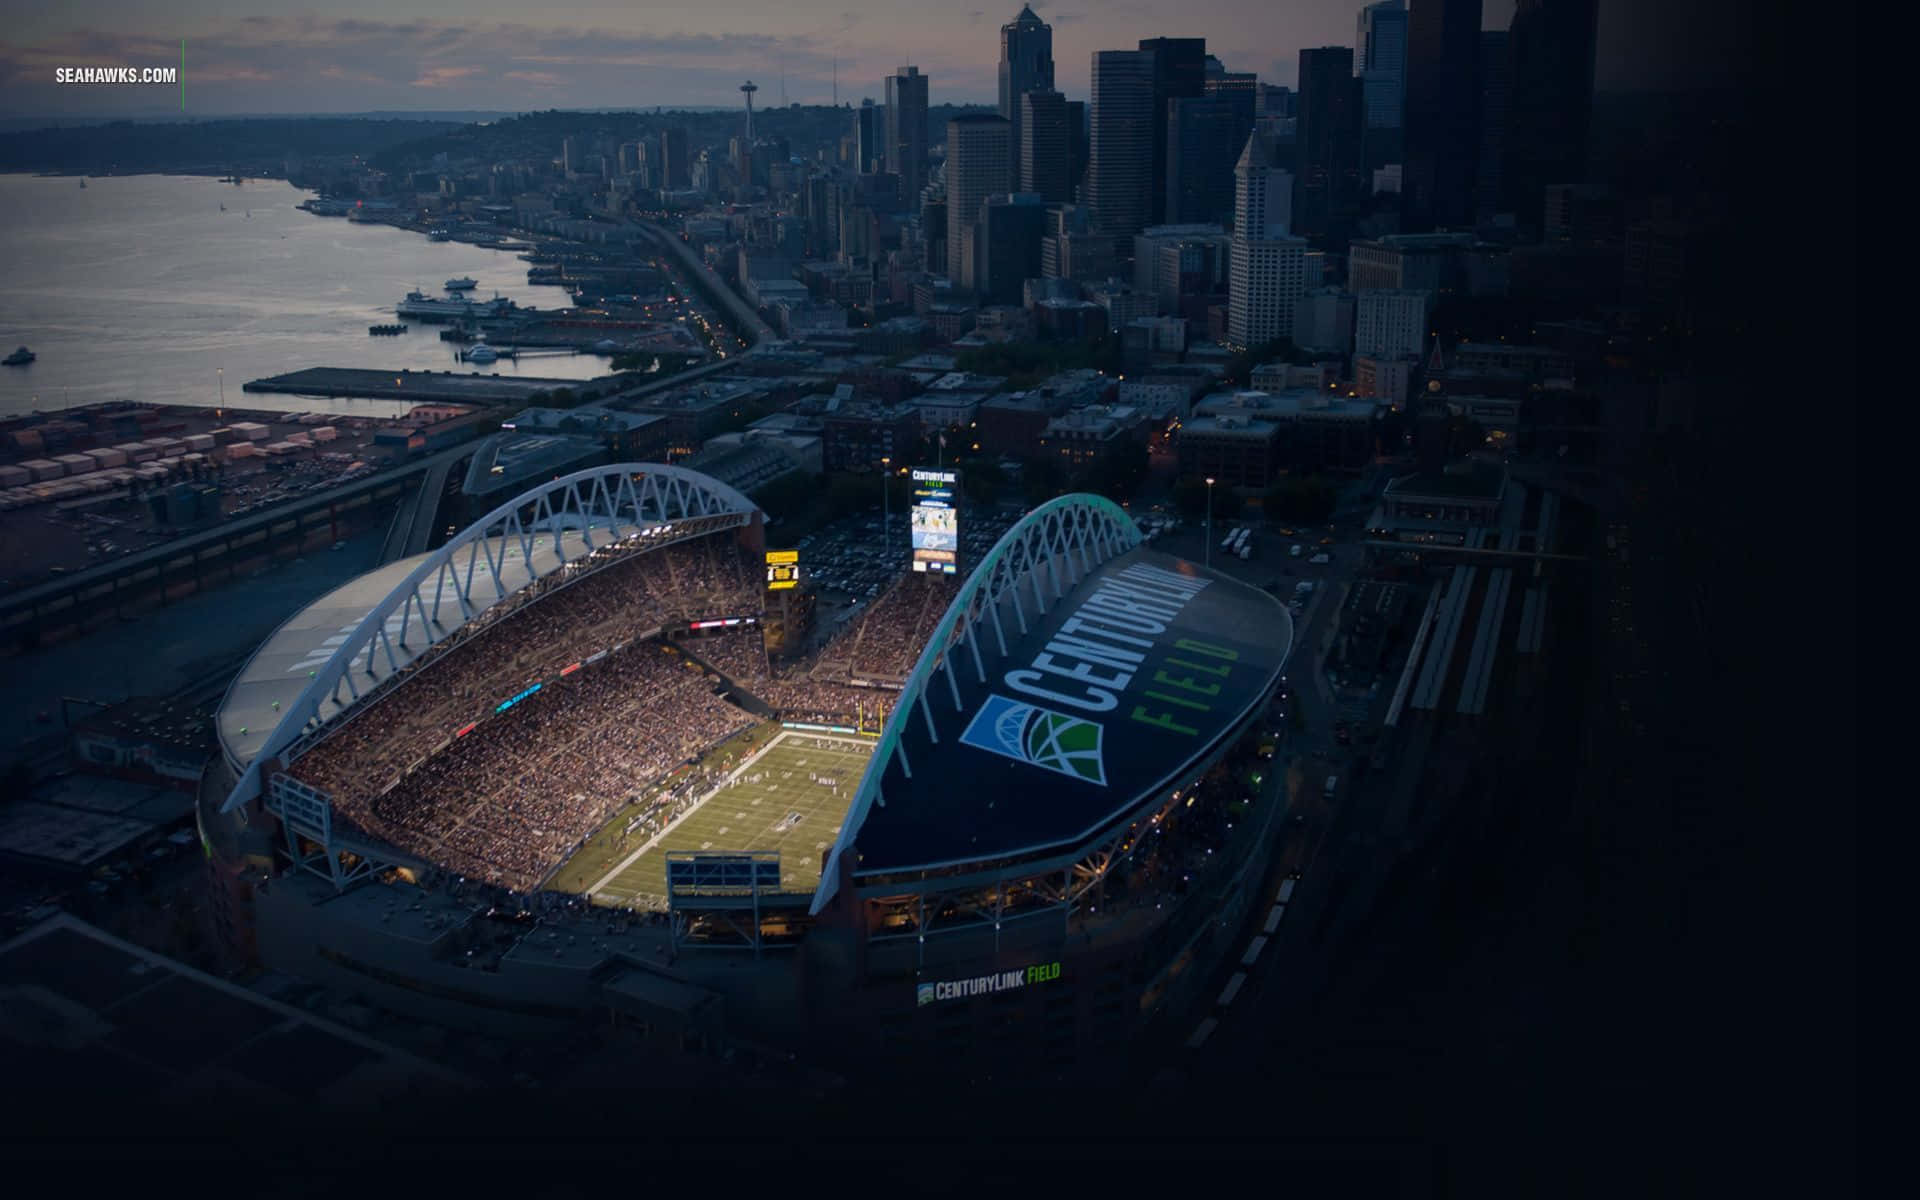 Seattle Seahawks stadium with roaring crowd